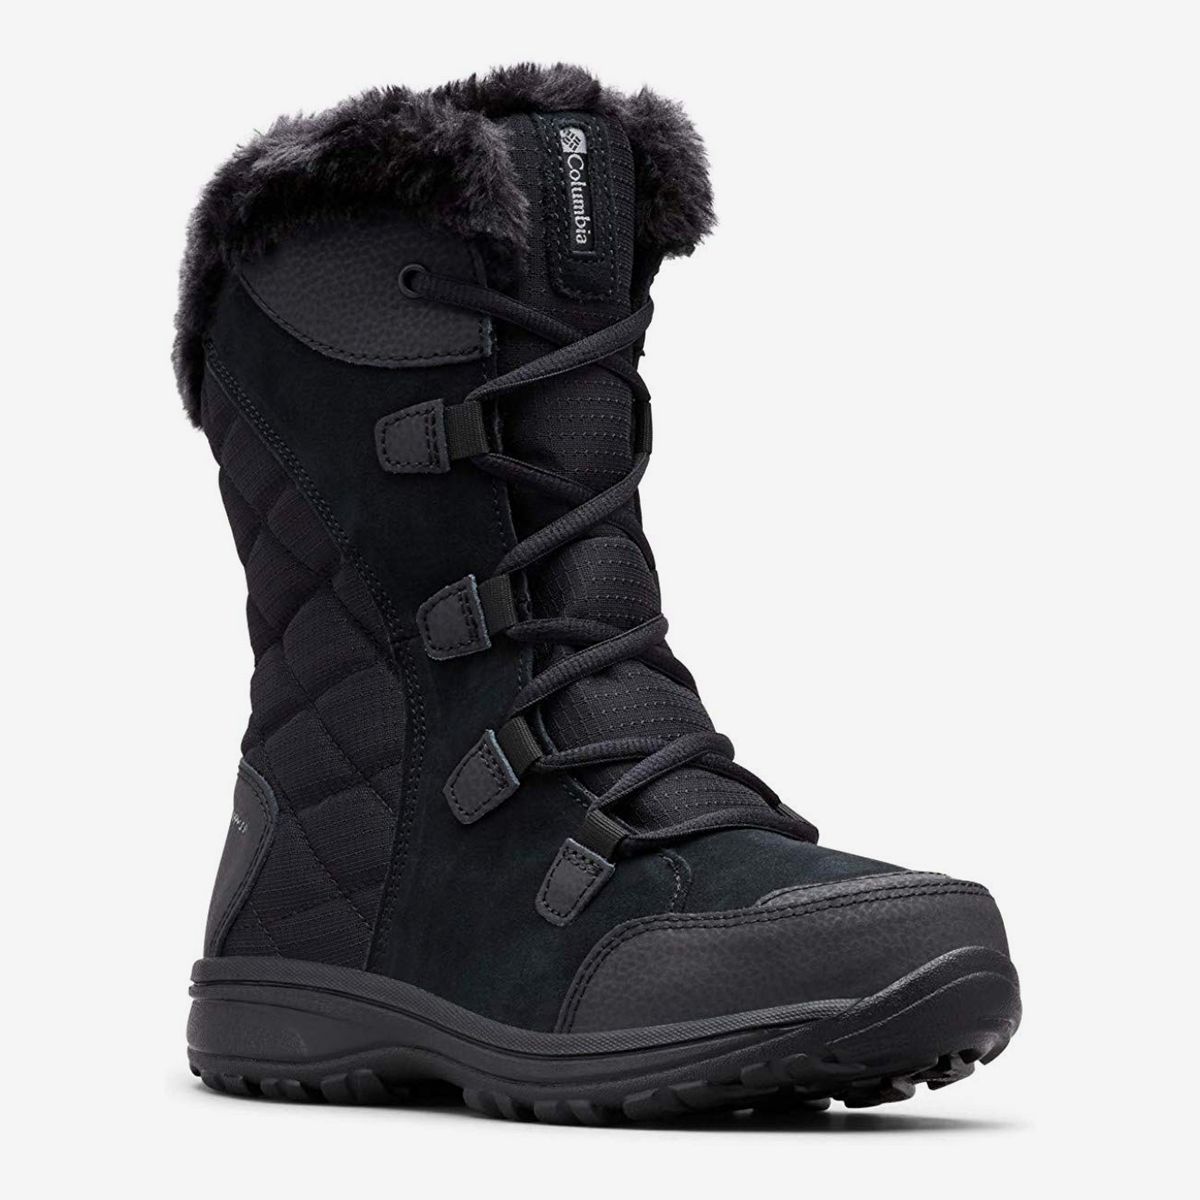 13 Best Winter Boots for Women 2020 